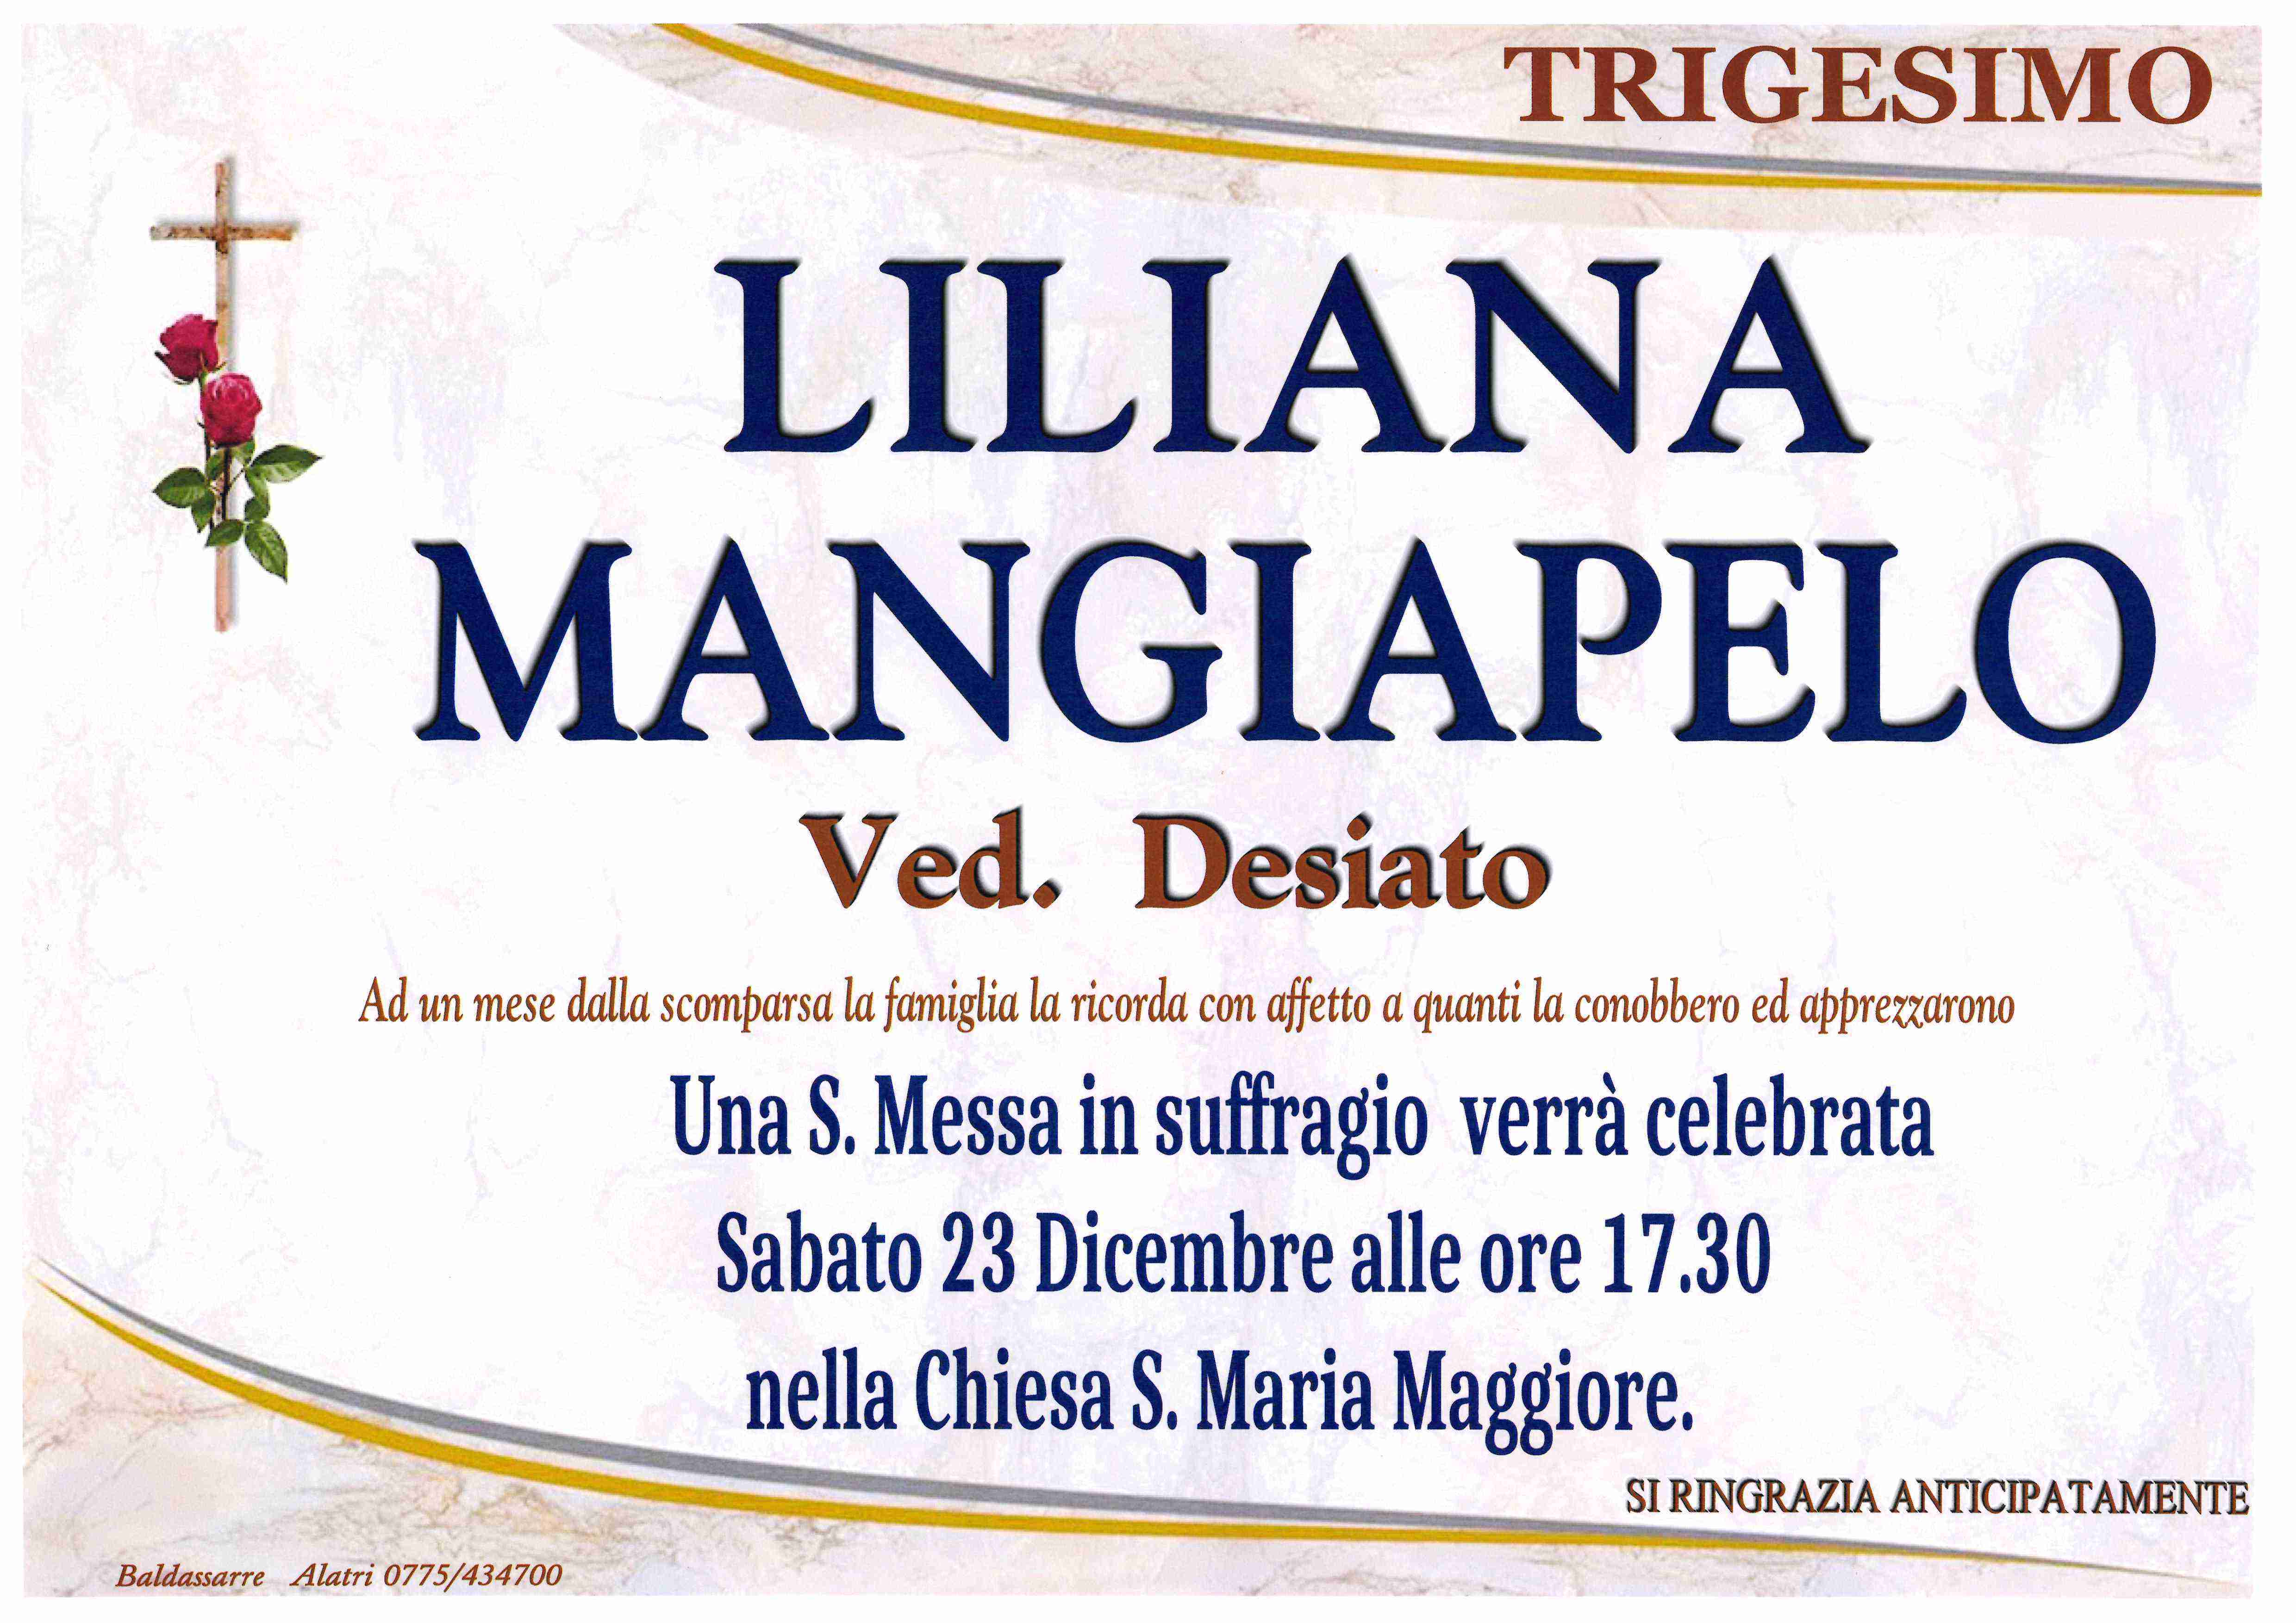 Liliana  Mangiapelo